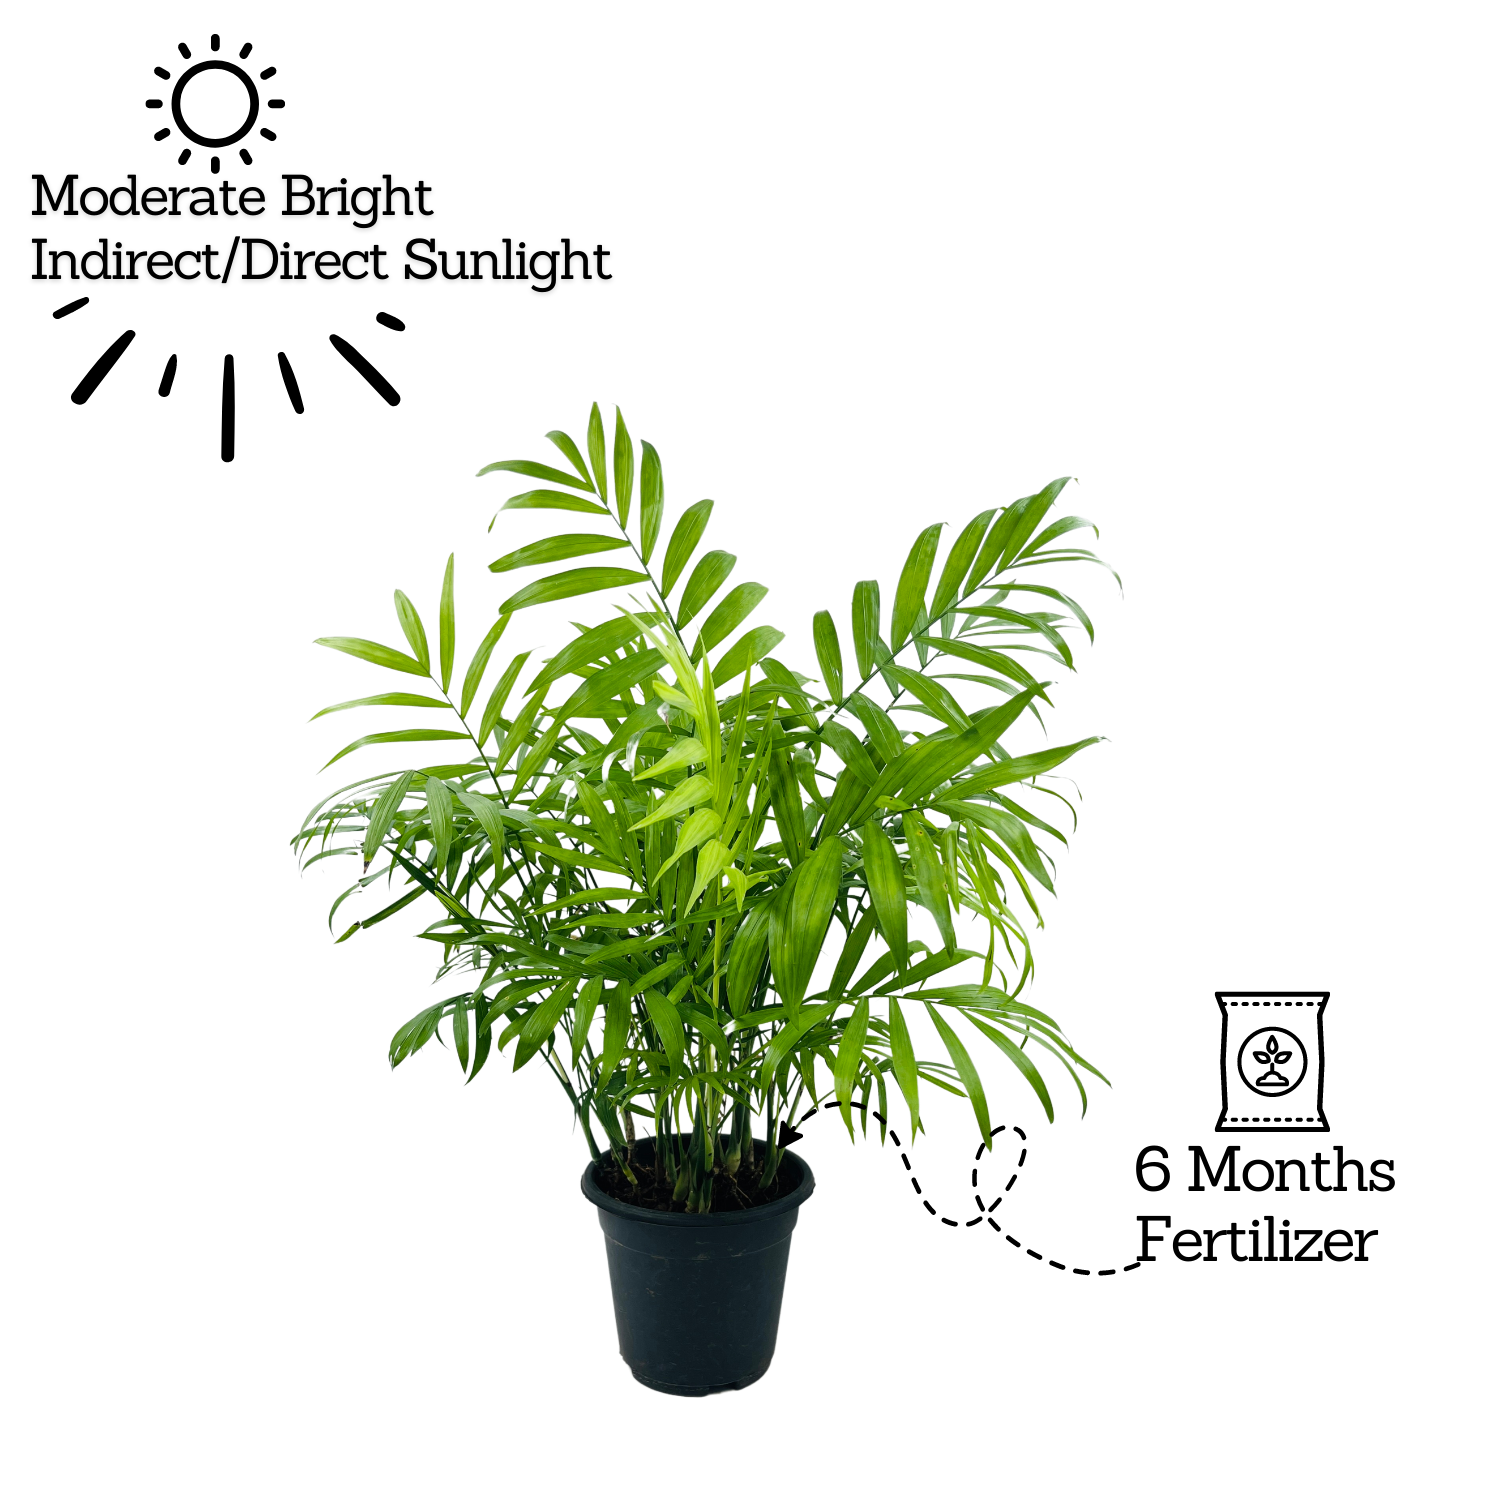 Chamaedorea Palm (Chamaedorea seifrizii) - Live Plant For Indoor (Home & Garden)